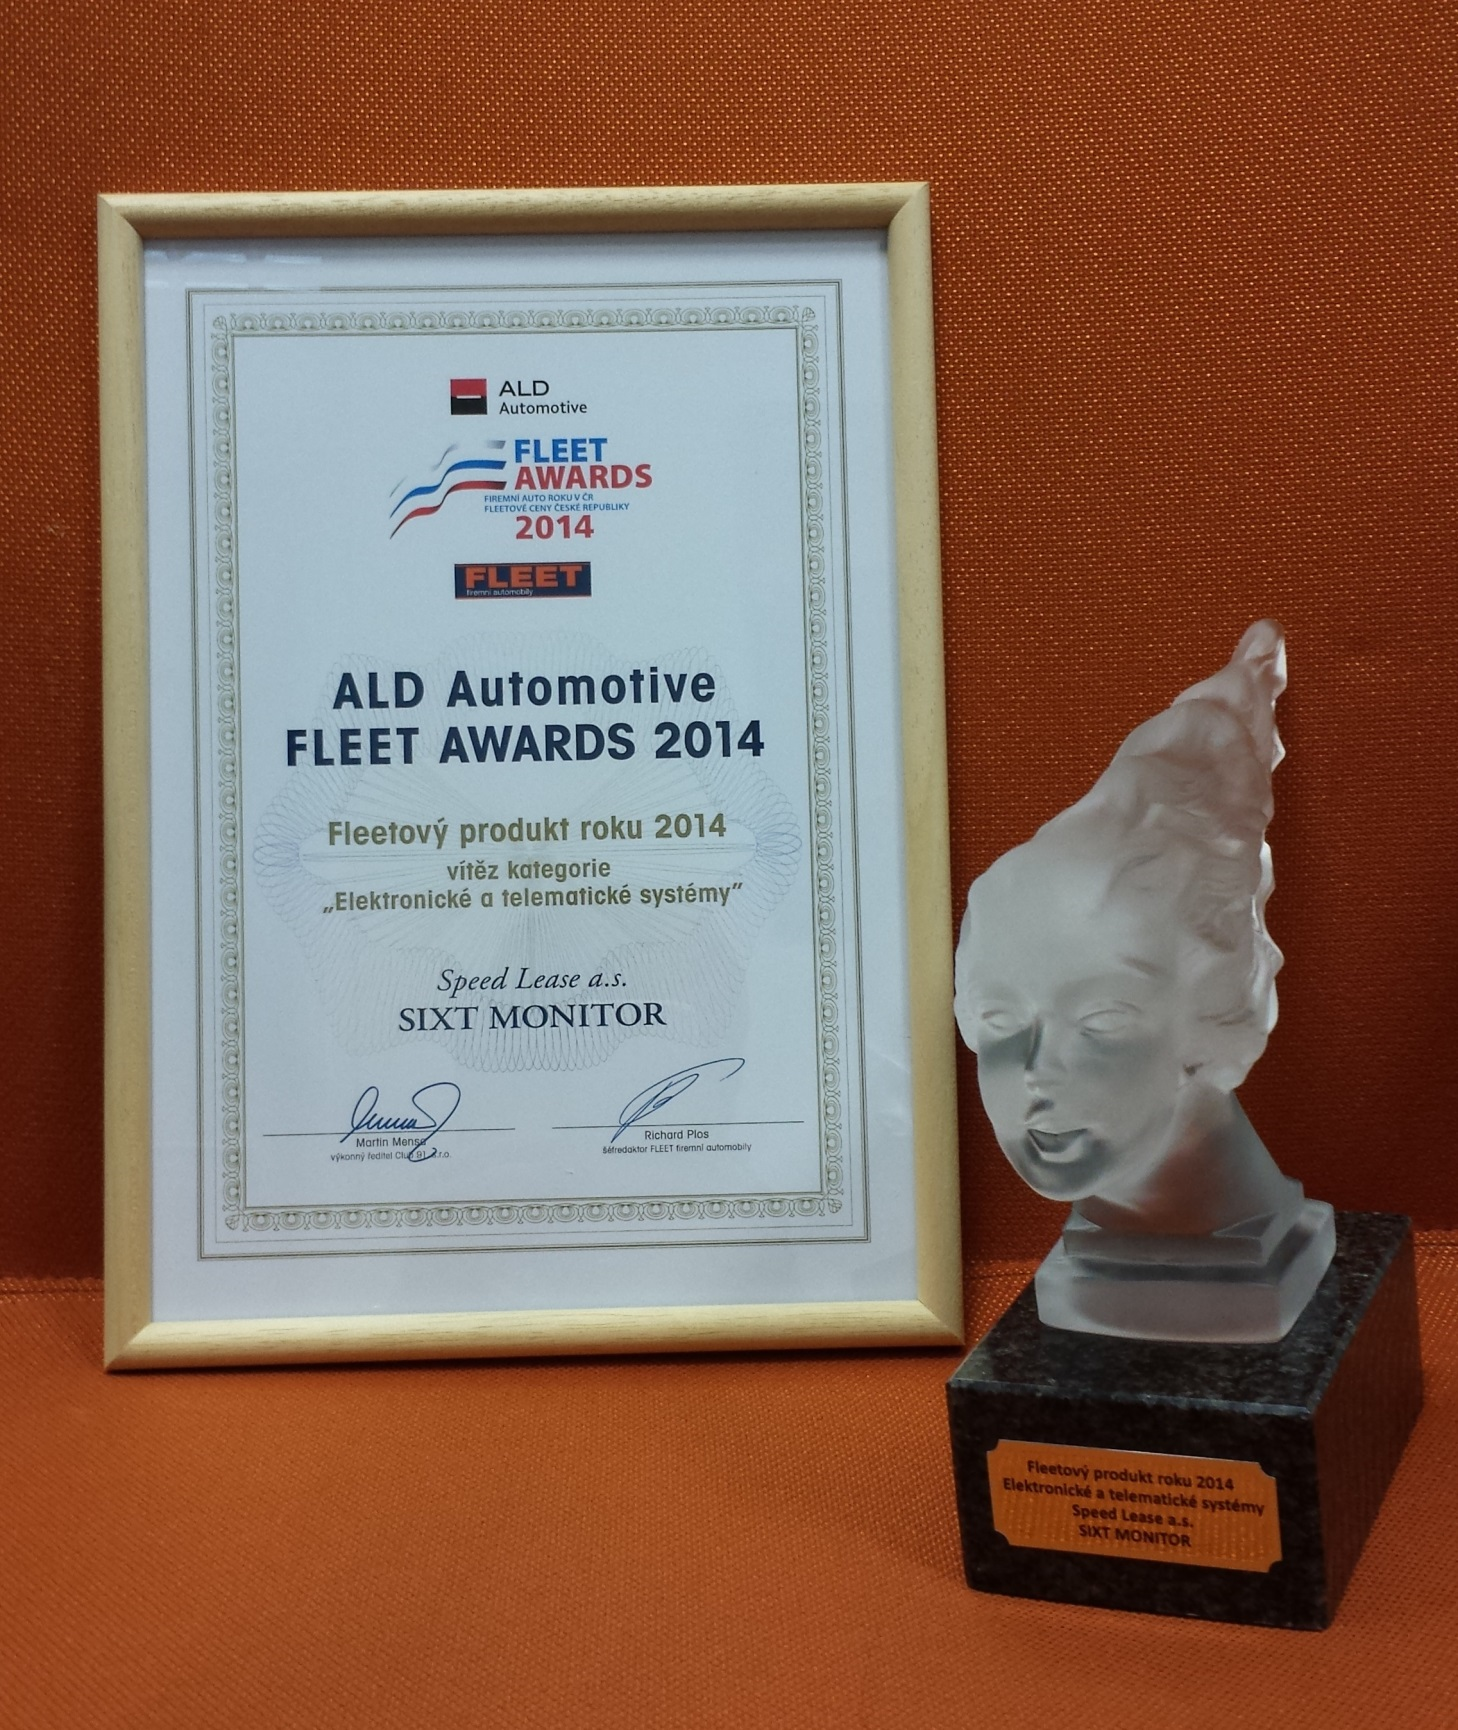 Sixt 2014 Fleet Award - The best leading product